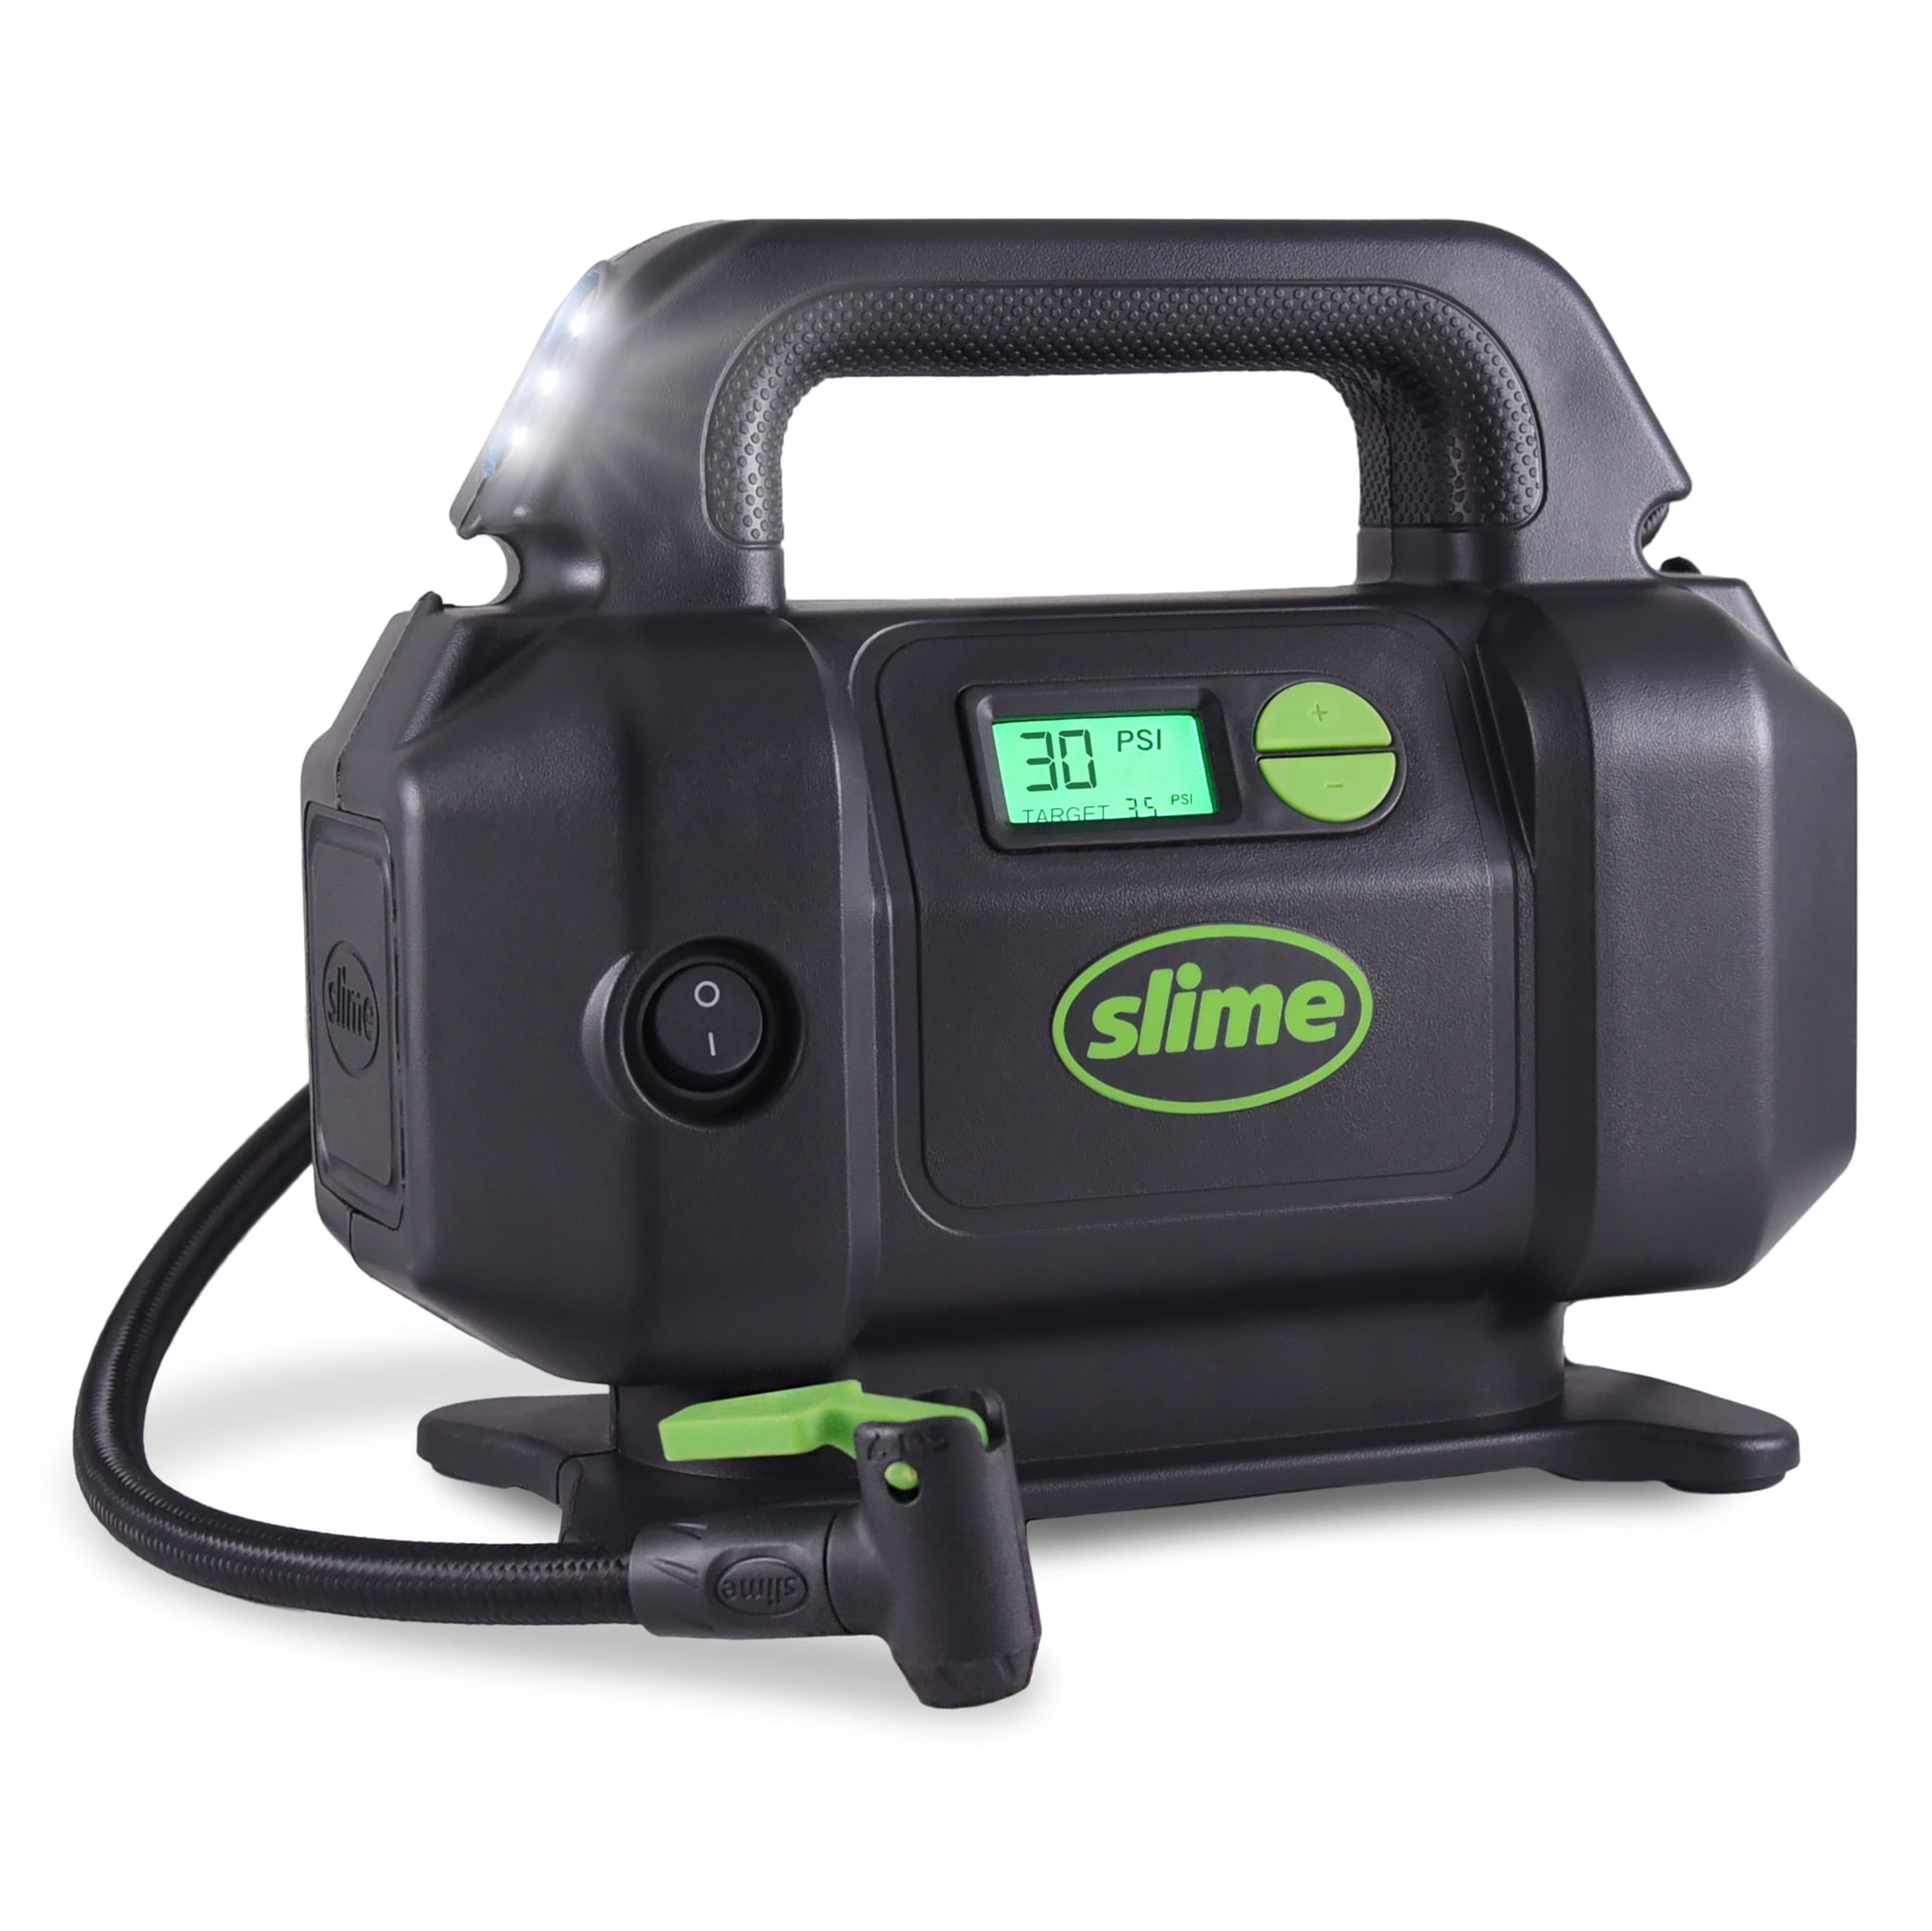 Slime 12 Air Inflator (Power Source: Car) in the Air Inflators department  at